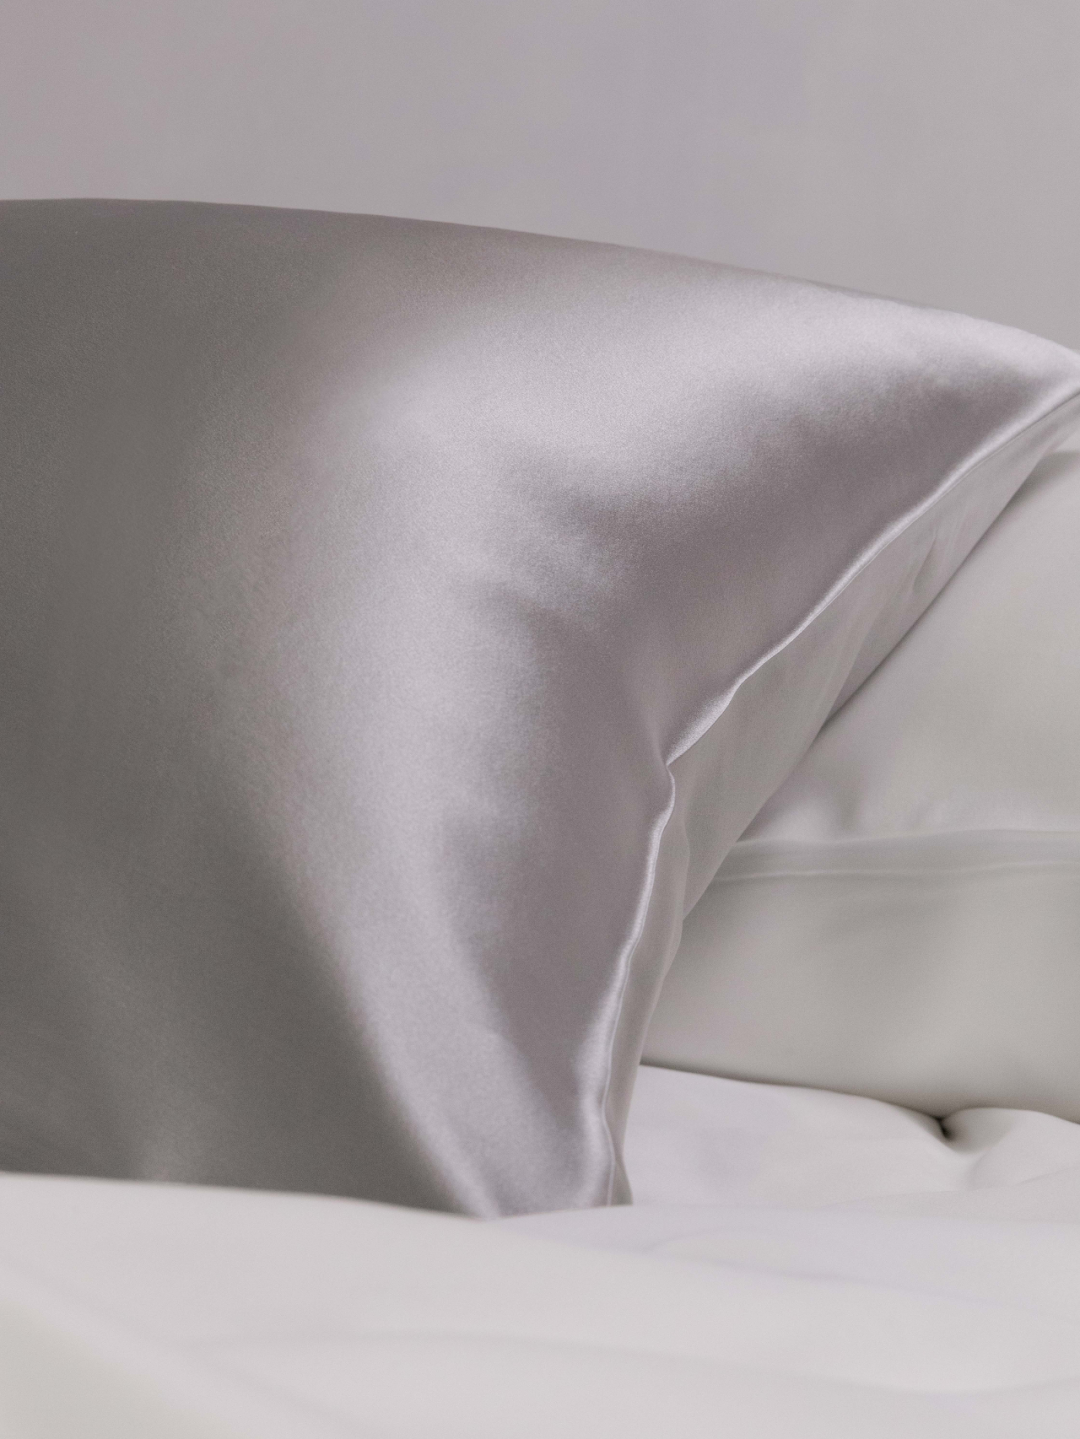 Bedding Wars: Polyester Pillowcases vs Silk Pillowcases